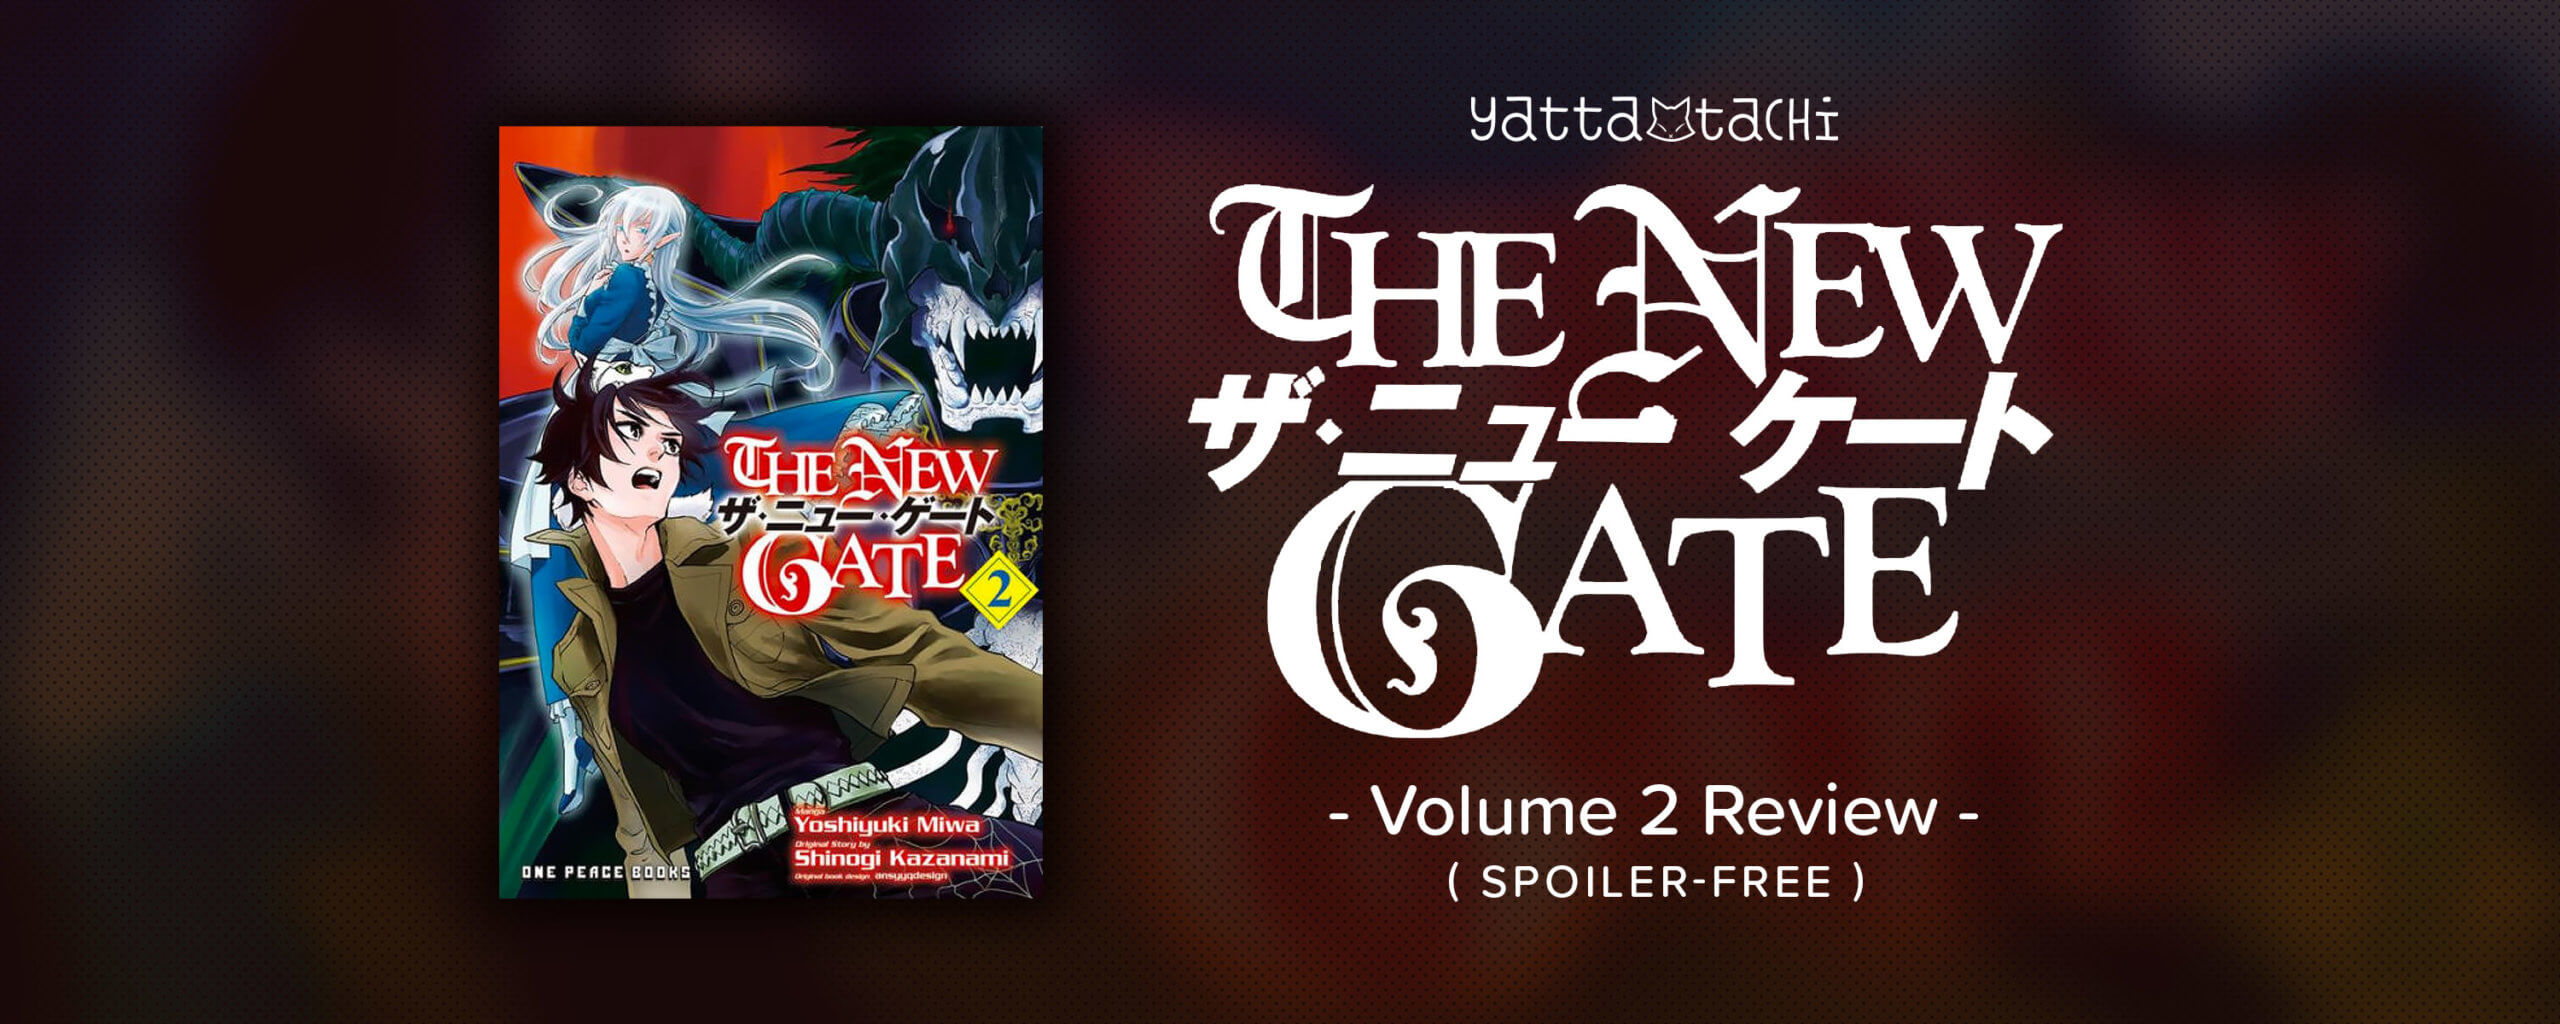 The New Gate Volume 2 Review (Spoiler-Free) | Yatta-Tachi